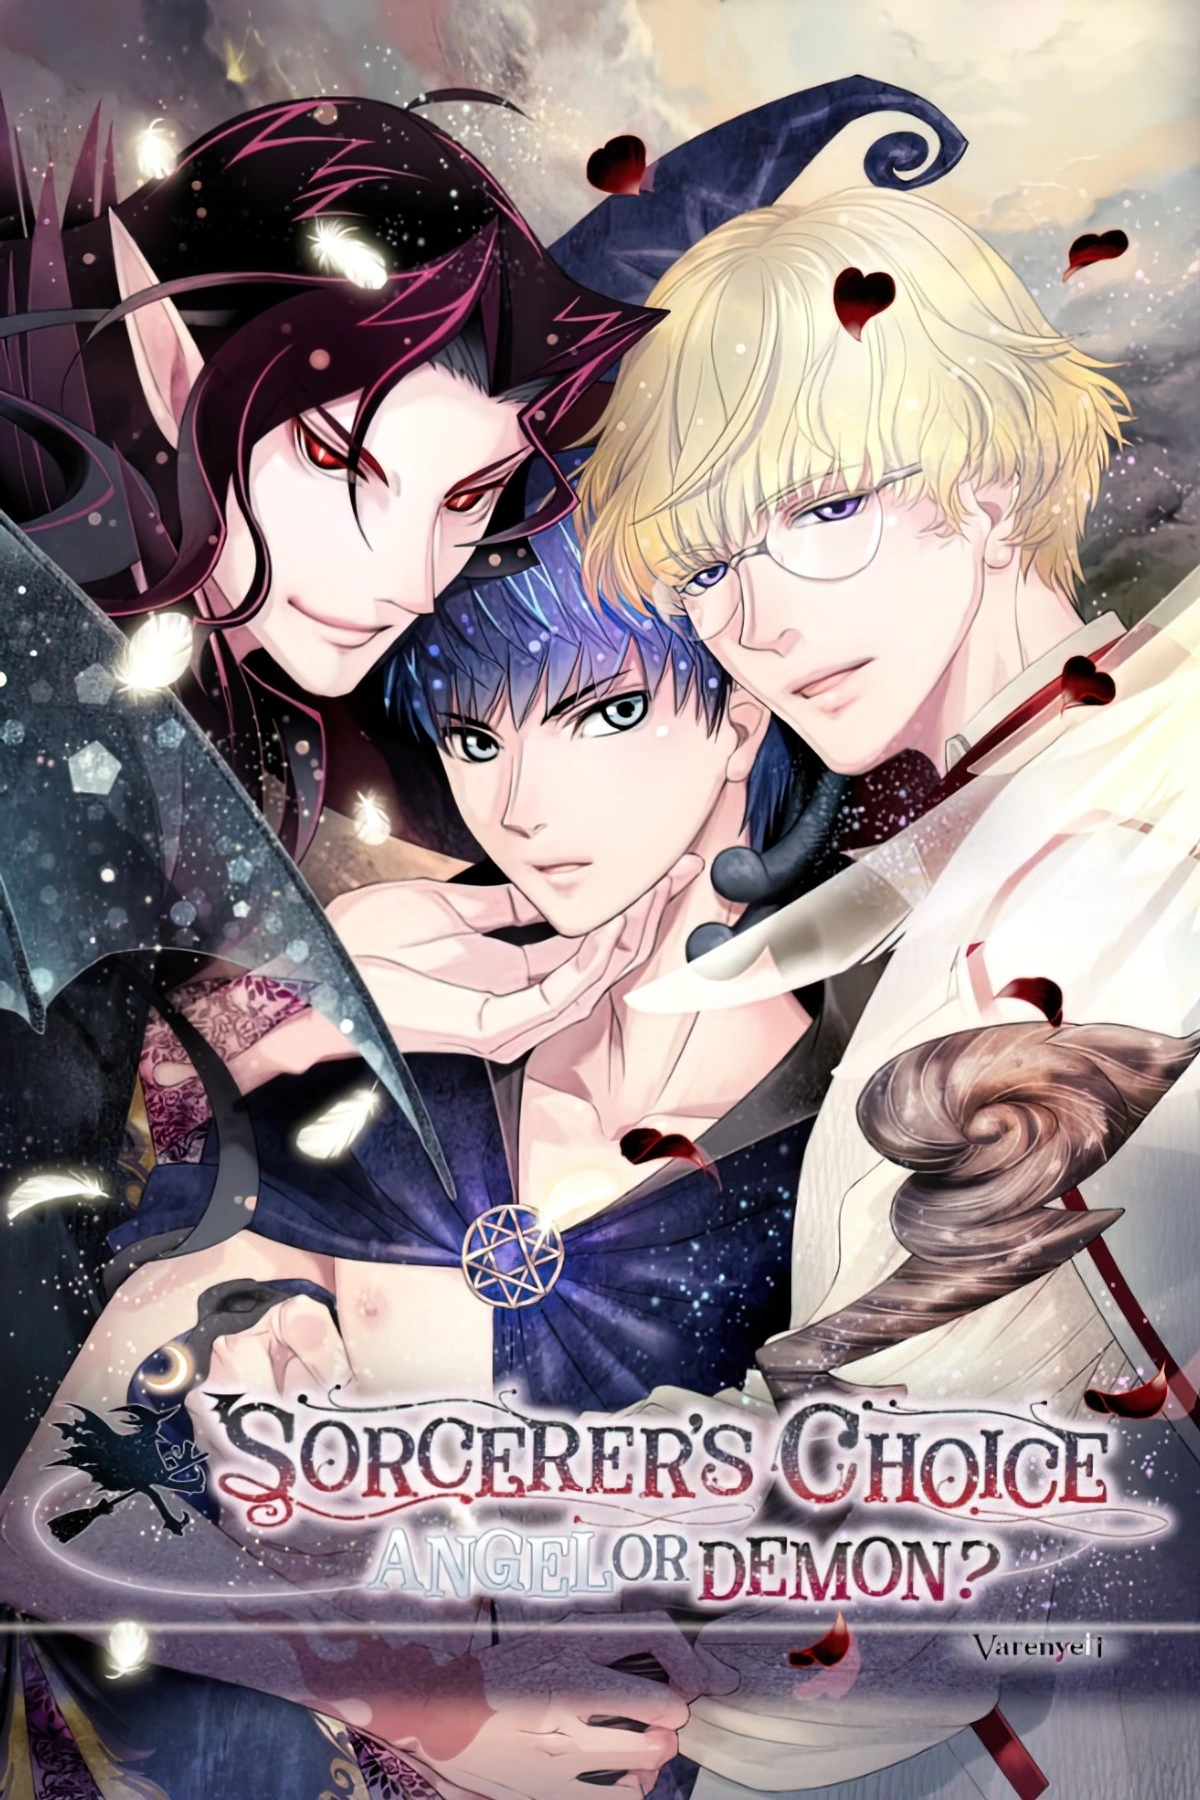 Sorcerer's Choice: Angel or Demon? main image